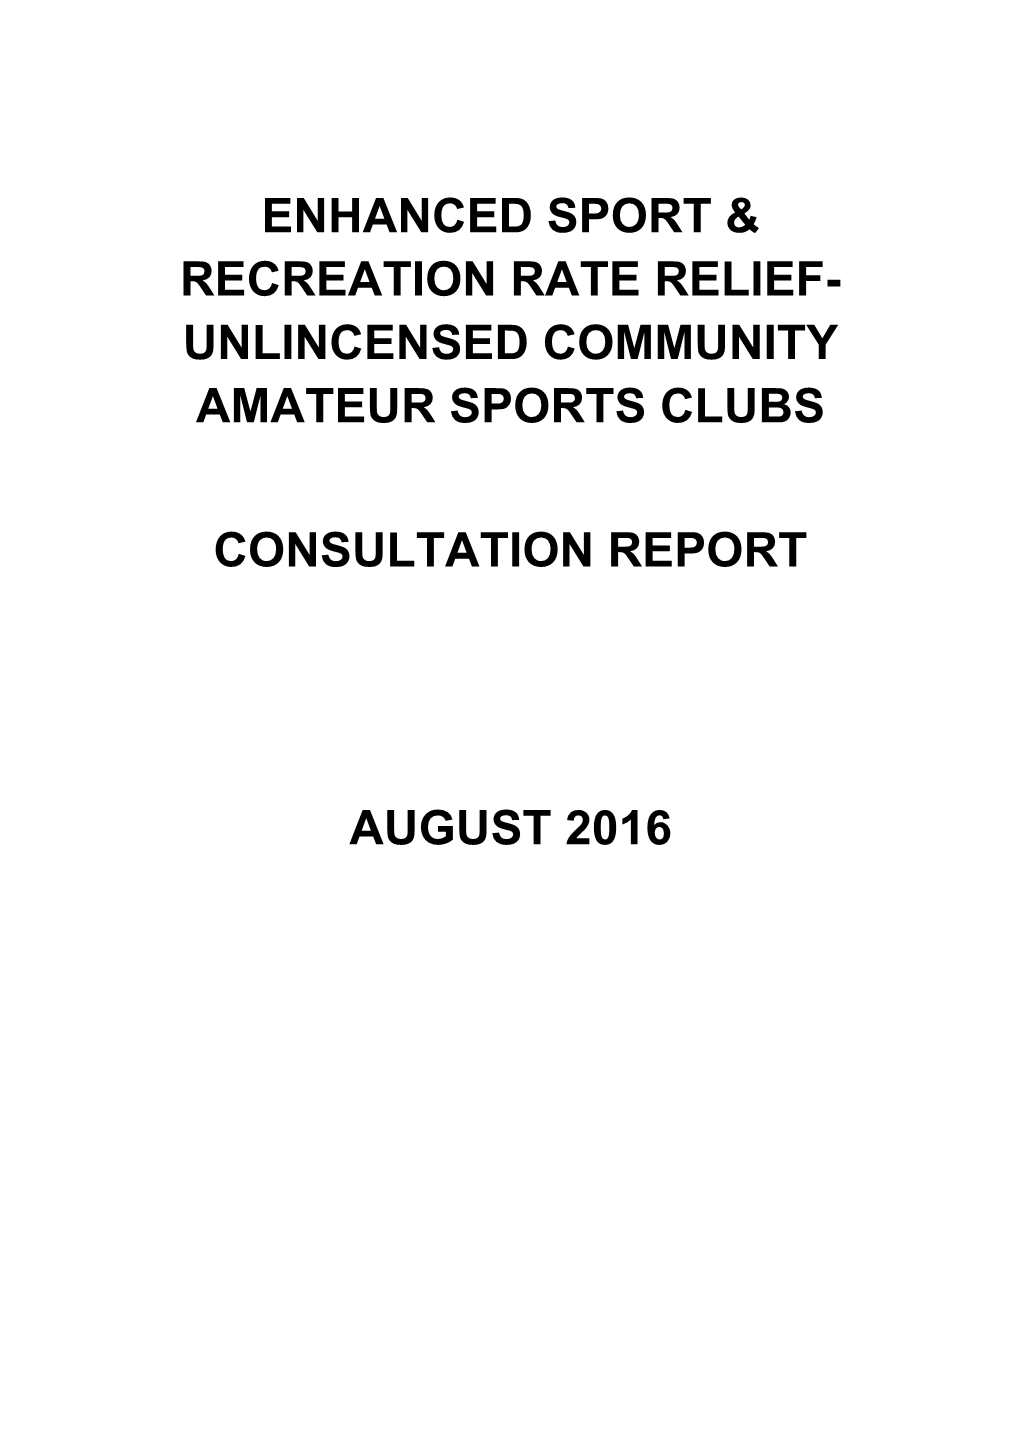 Enhanced Sport & Recreation Rate Relief- Unlincensed